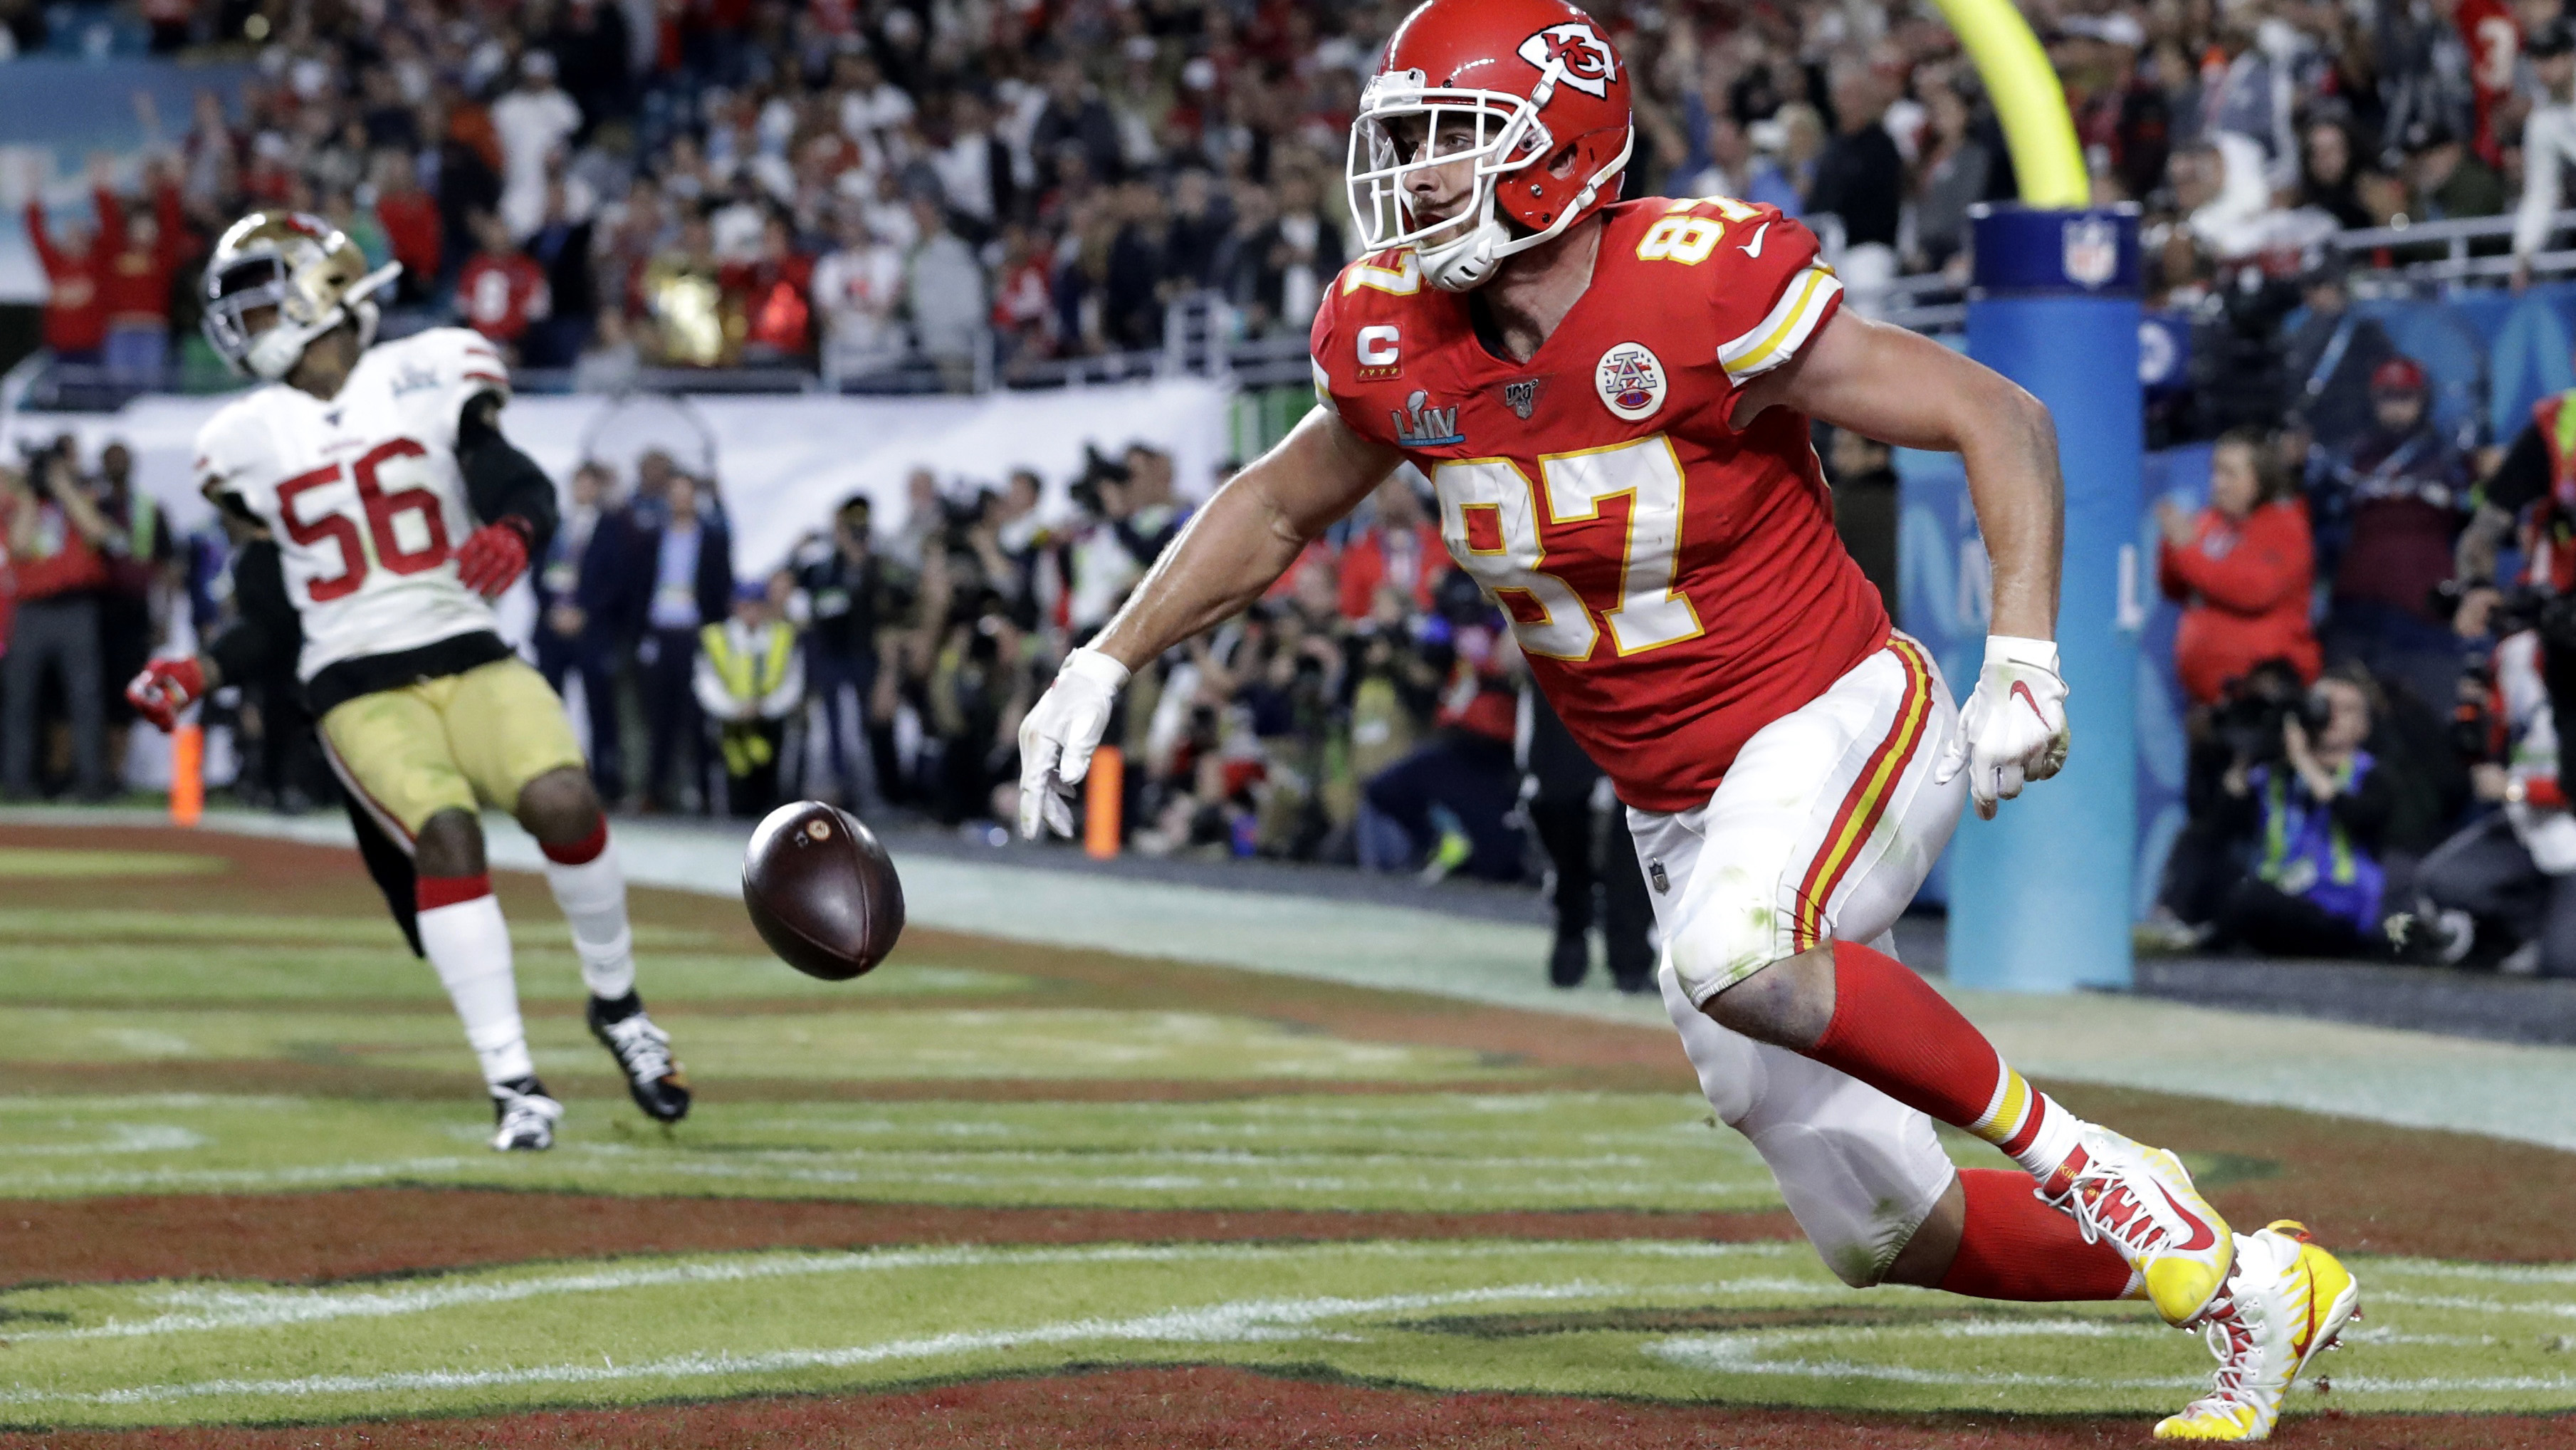 Super Bowl 54 Final Score: Chiefs shock 49ers in 31-20 thriller